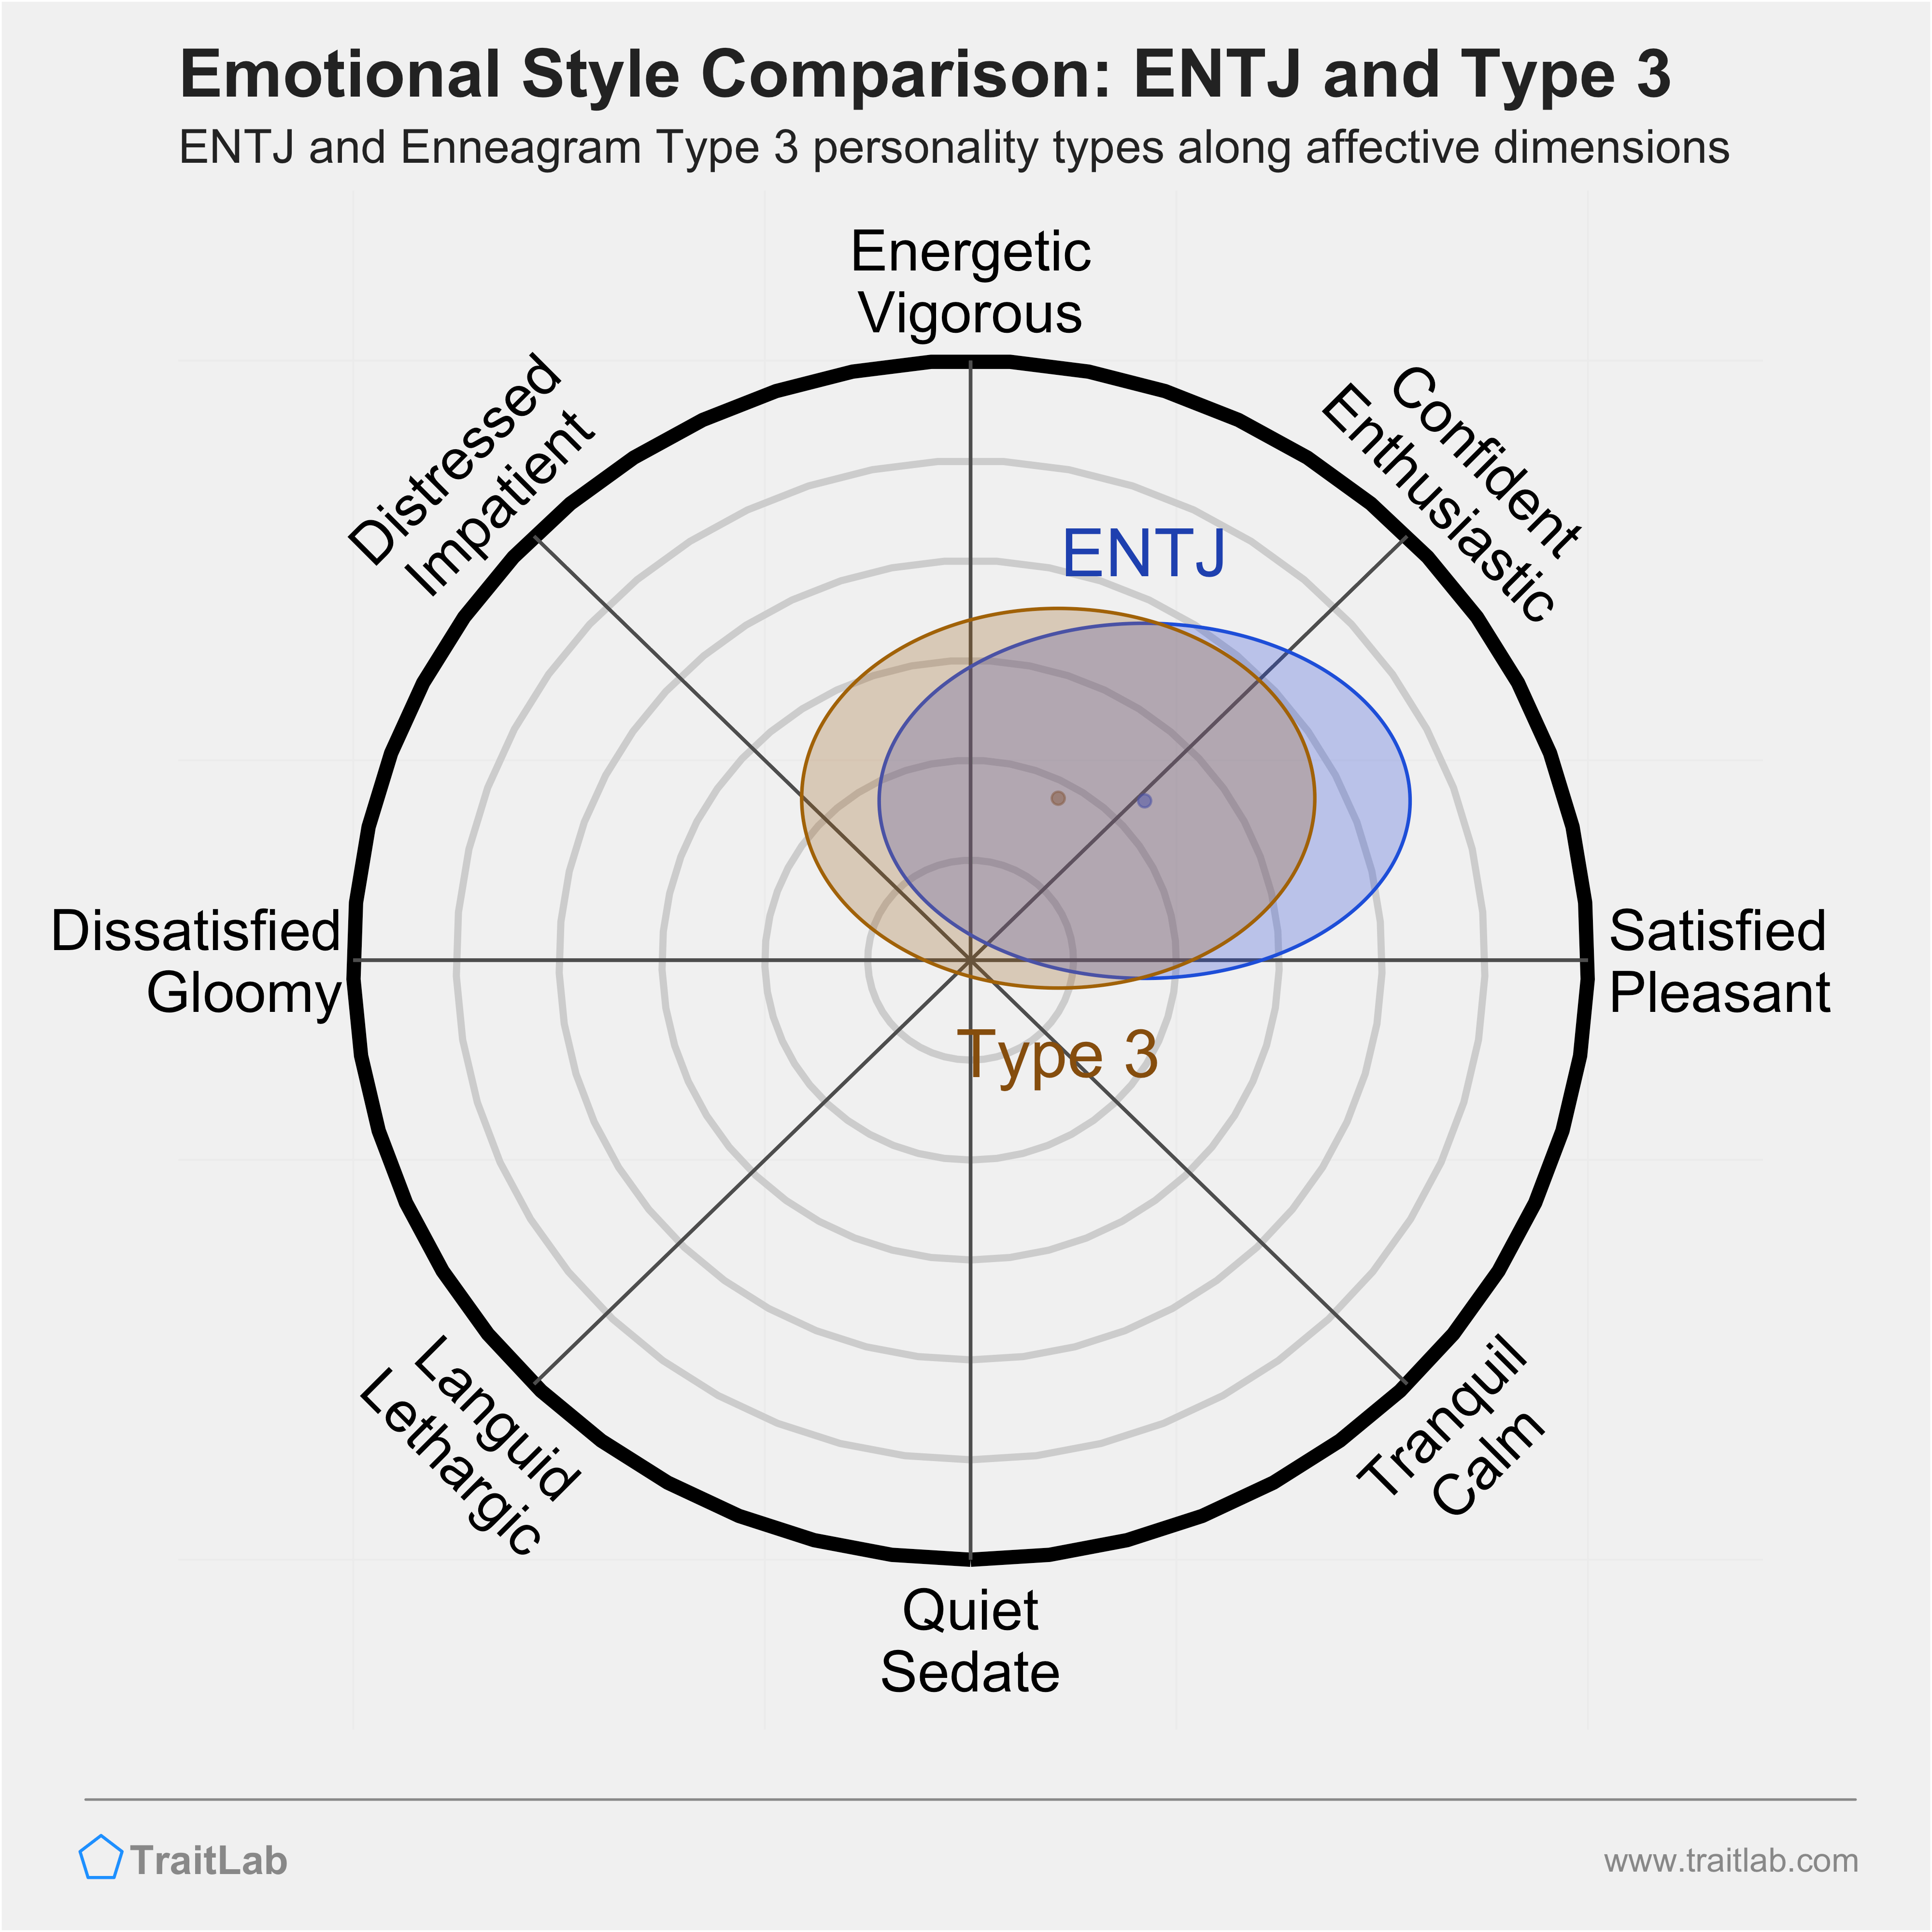 ENTJ and Type 3 comparison across emotional (affective) dimensions